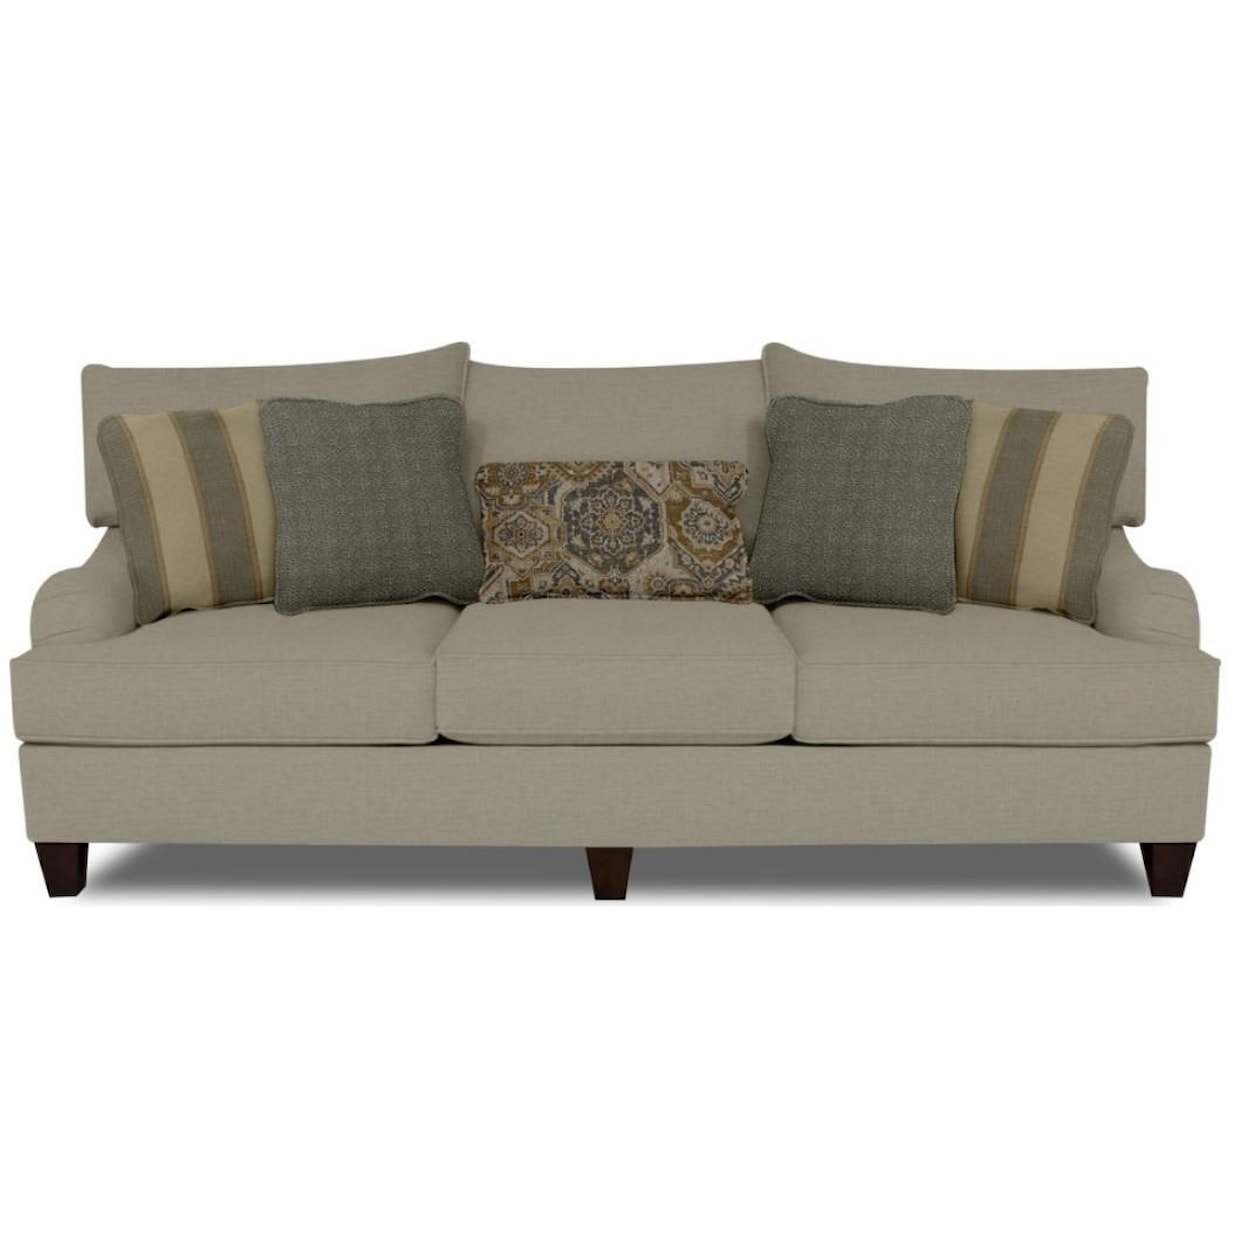 England Whitley Traditional 3 Cushion Sofa